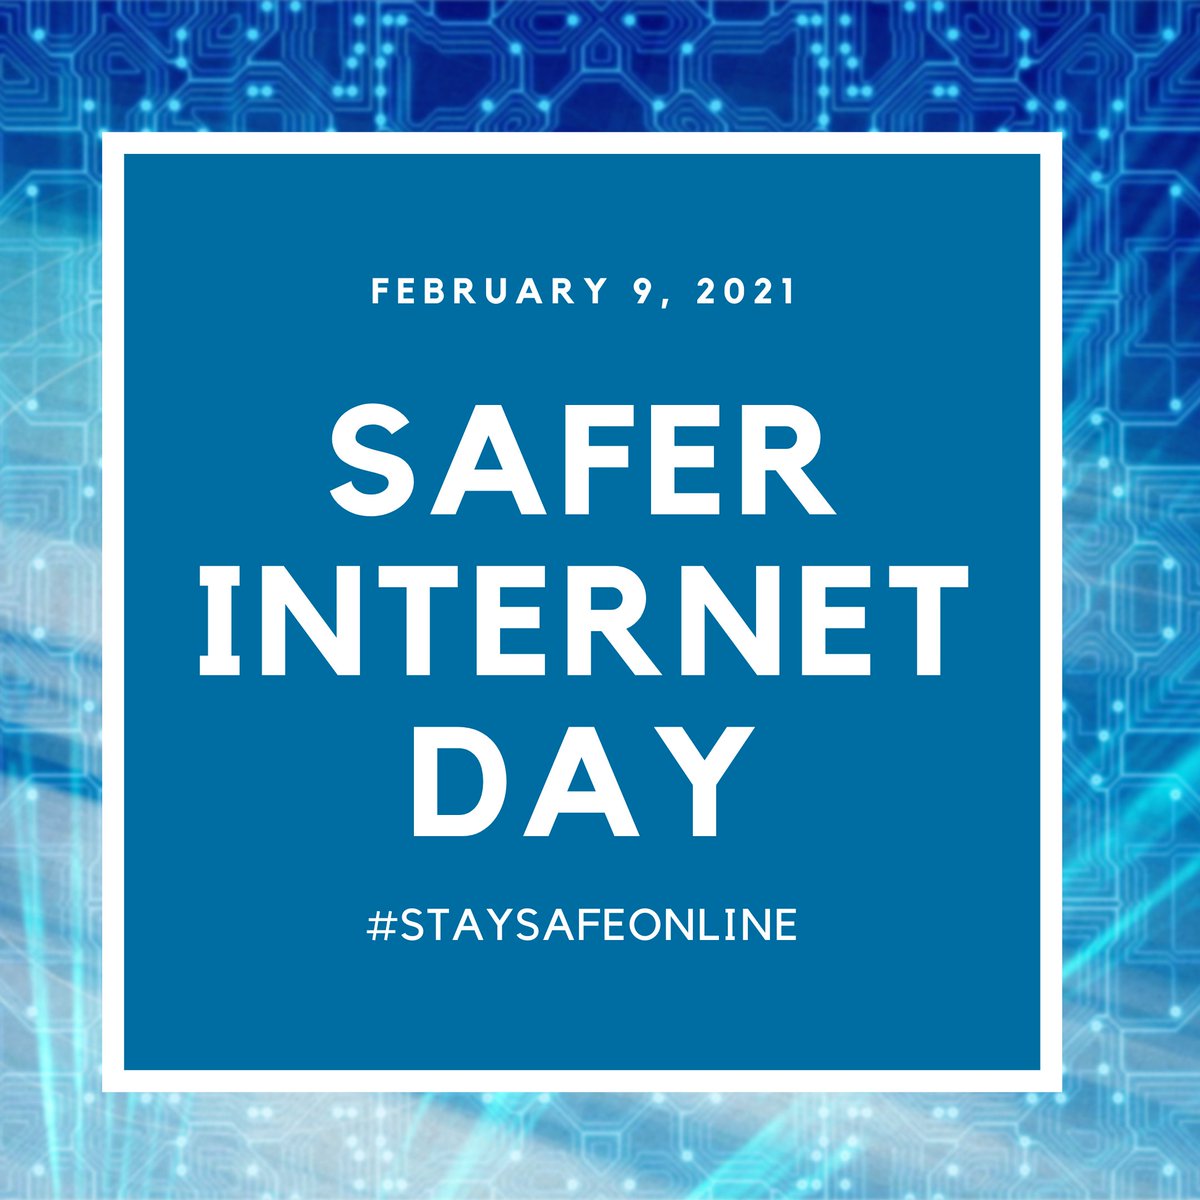 Stay Safe Online! 

#SaferInternetDay #cybersecurity #saferinternet #saferinternetday2021 #onlinesafety #internetsafety #internetsafetyforkids #onlinesafetyforkids #onlinesafetytips